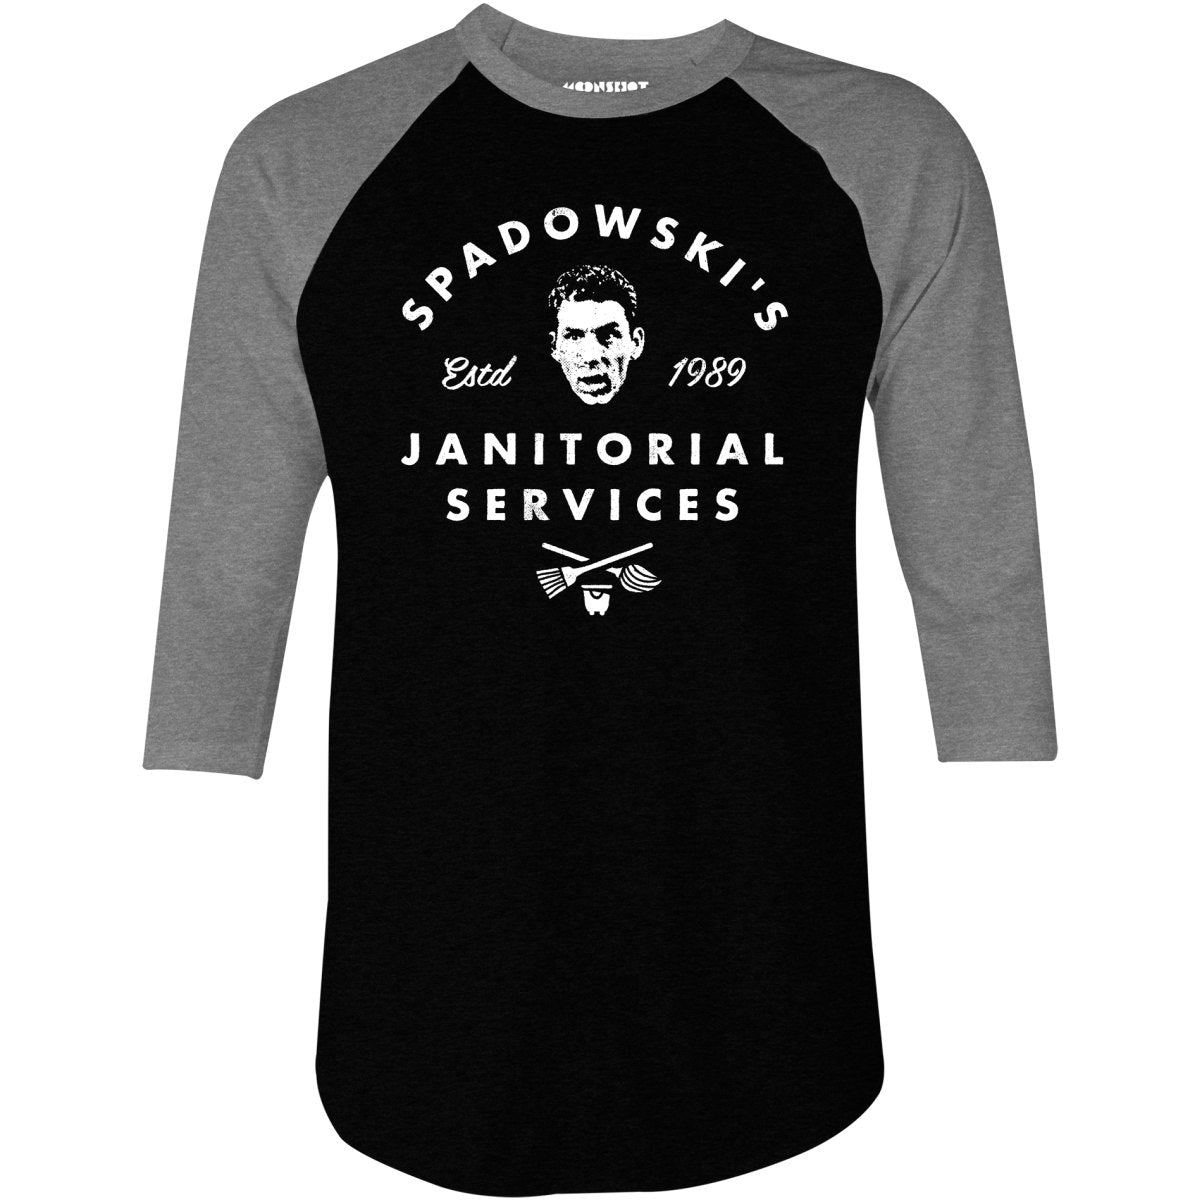 UHF Spadowski's Janitorial Services - 3/4 Sleeve Raglan T-Shirt